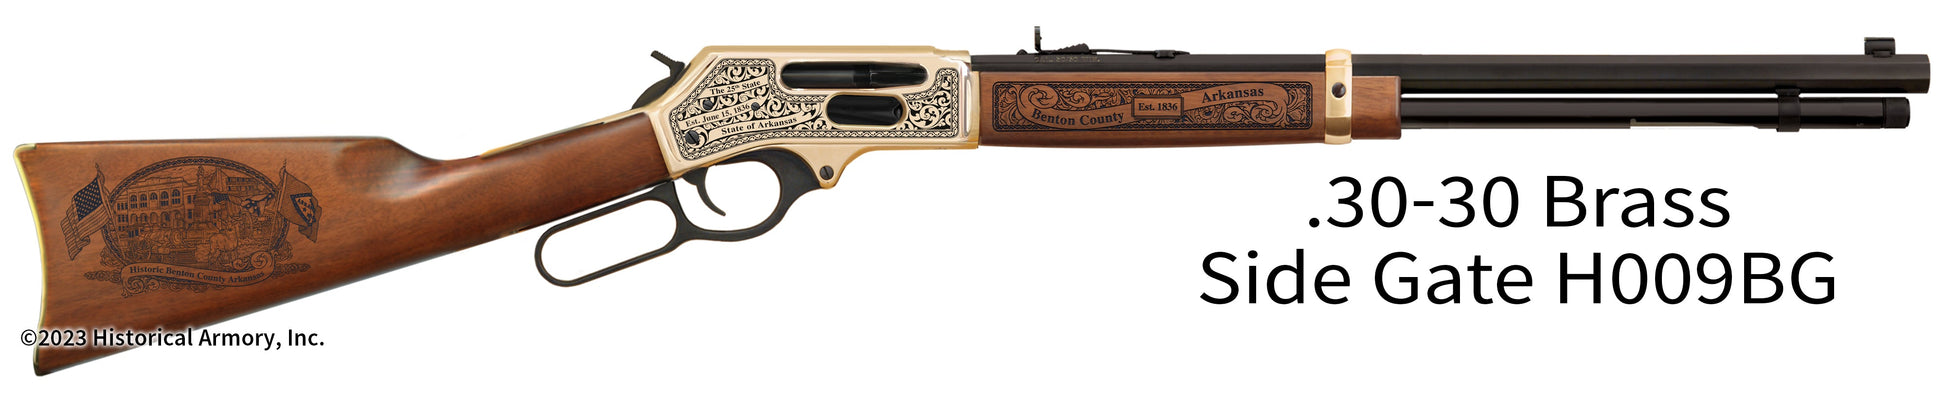 Benton County Arkansas Engraved Henry .30-30 Brass Side Gate Rifle